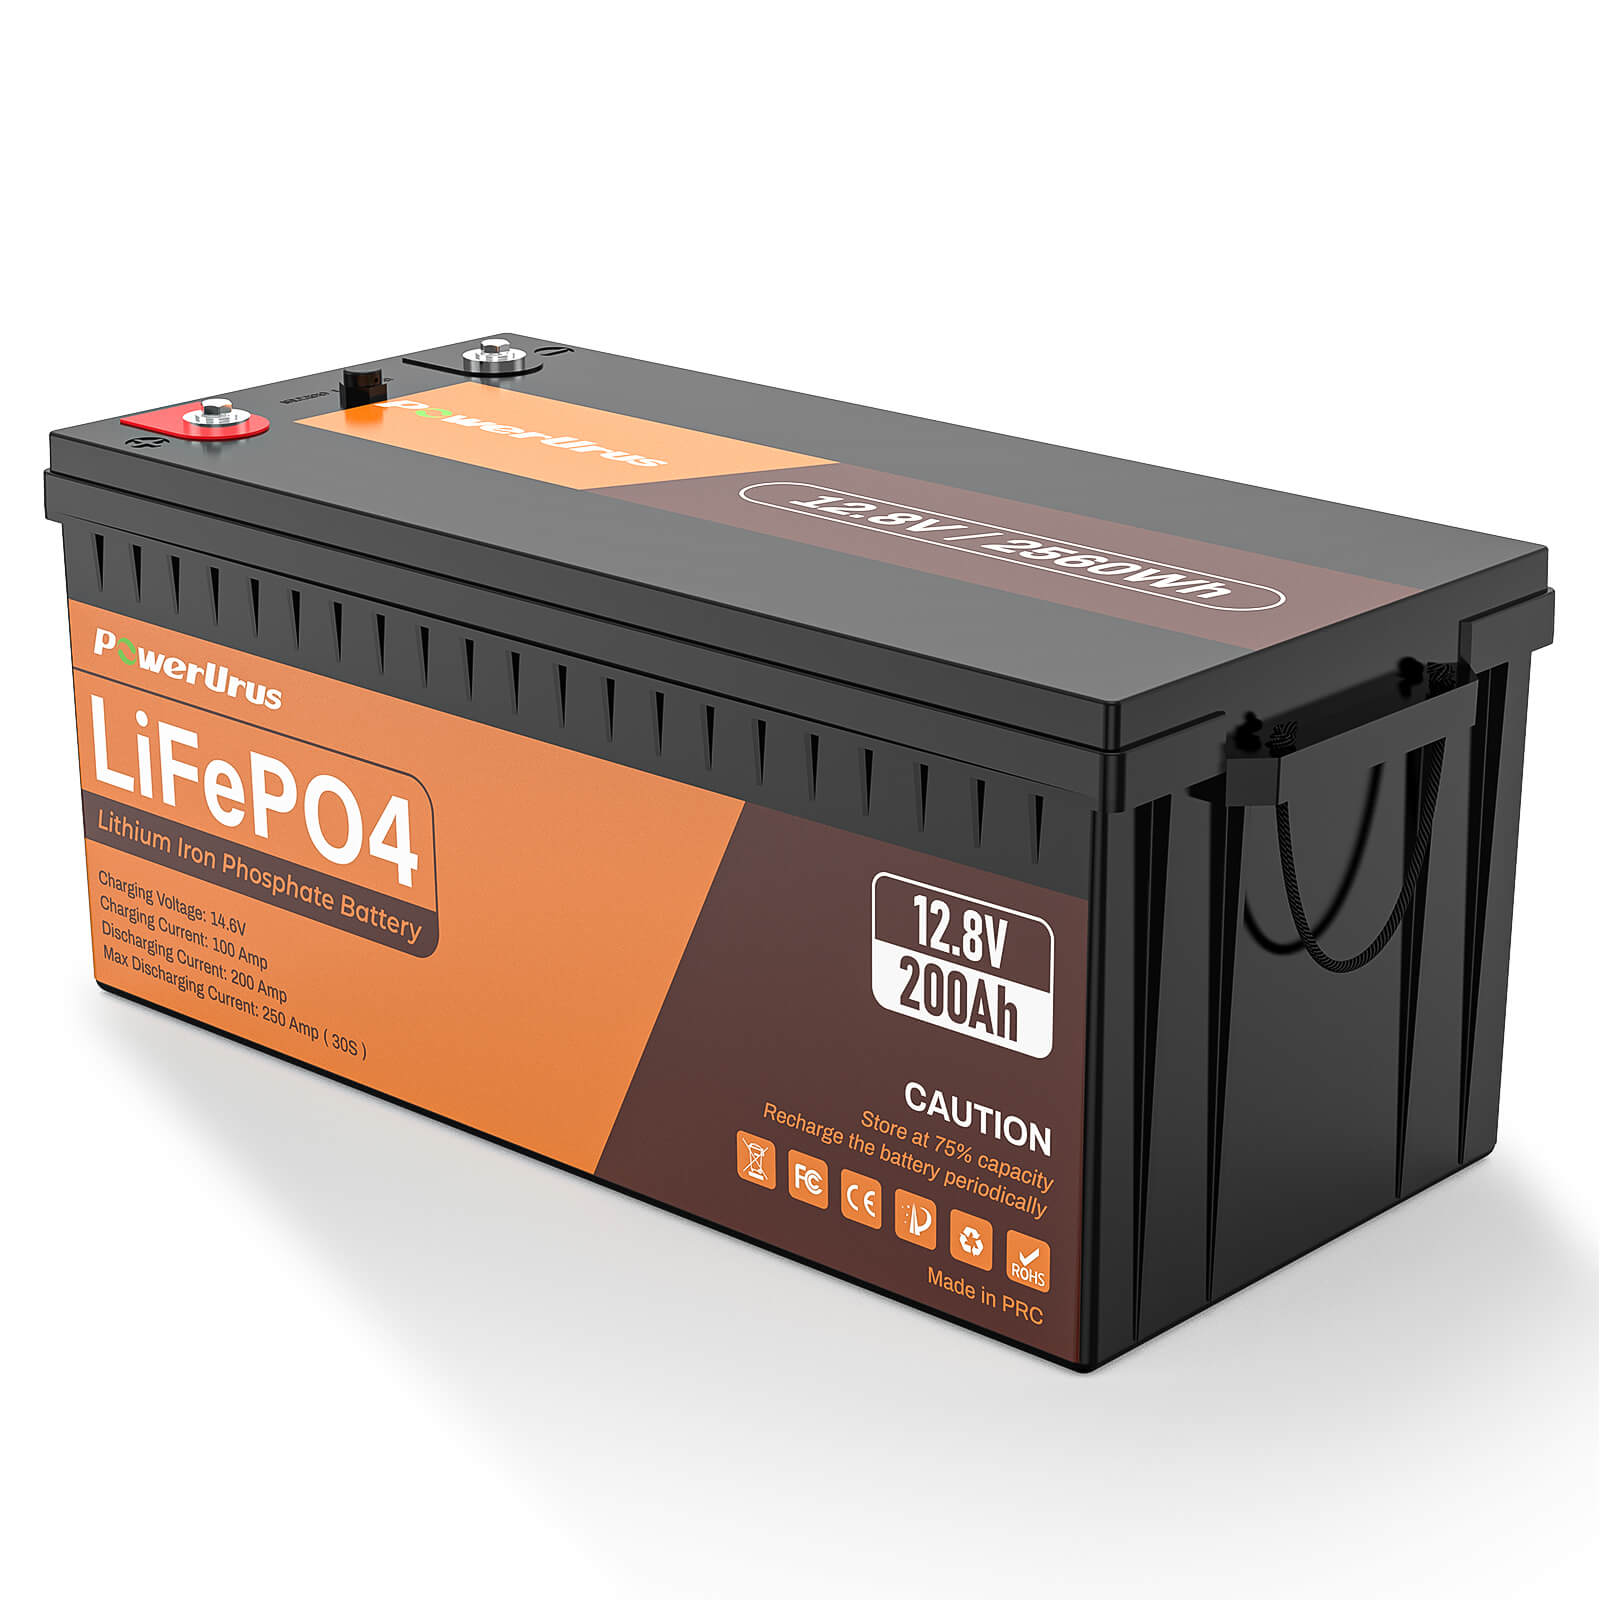 PowerUrus 12V 200AH LiFePO4 Deep Cycle Rechargeable Battery EU countries